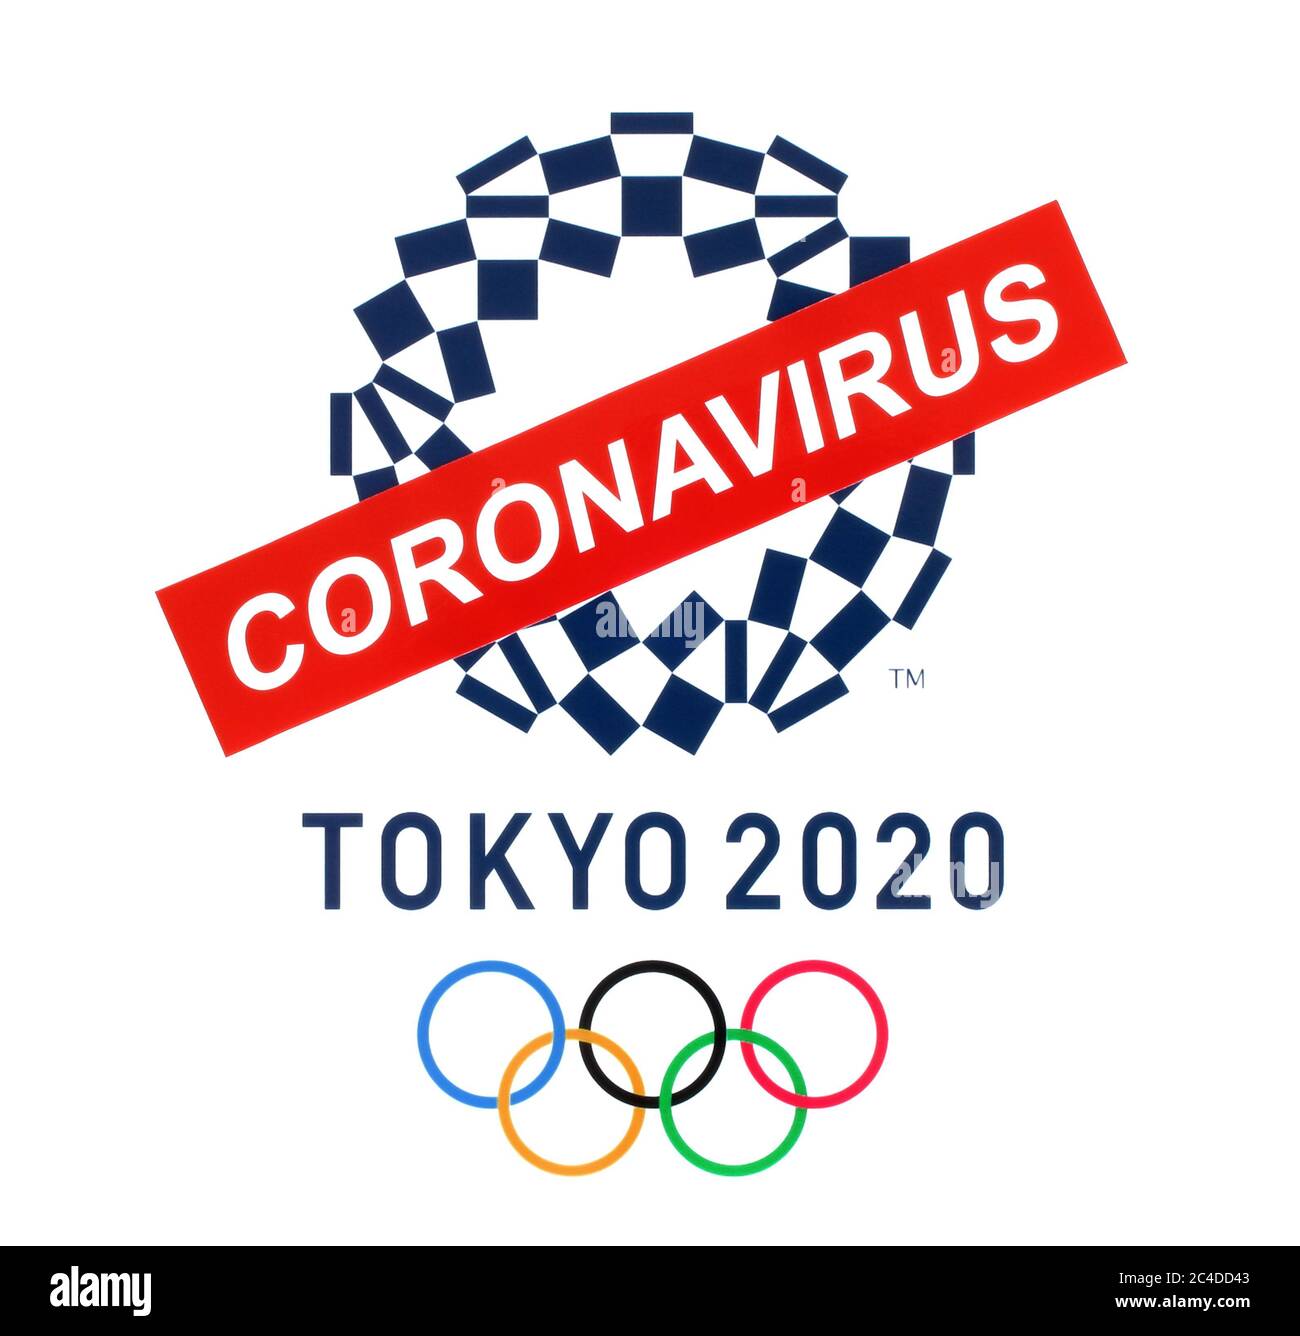 Kiev, Ucraina - Marzo 20,2020: Summer Olympic Games 2020 logo Tokio, Giappone, stampato su carta, attraversato da carta segno Coronavirus. Le Olimpiadi erano pos Foto Stock